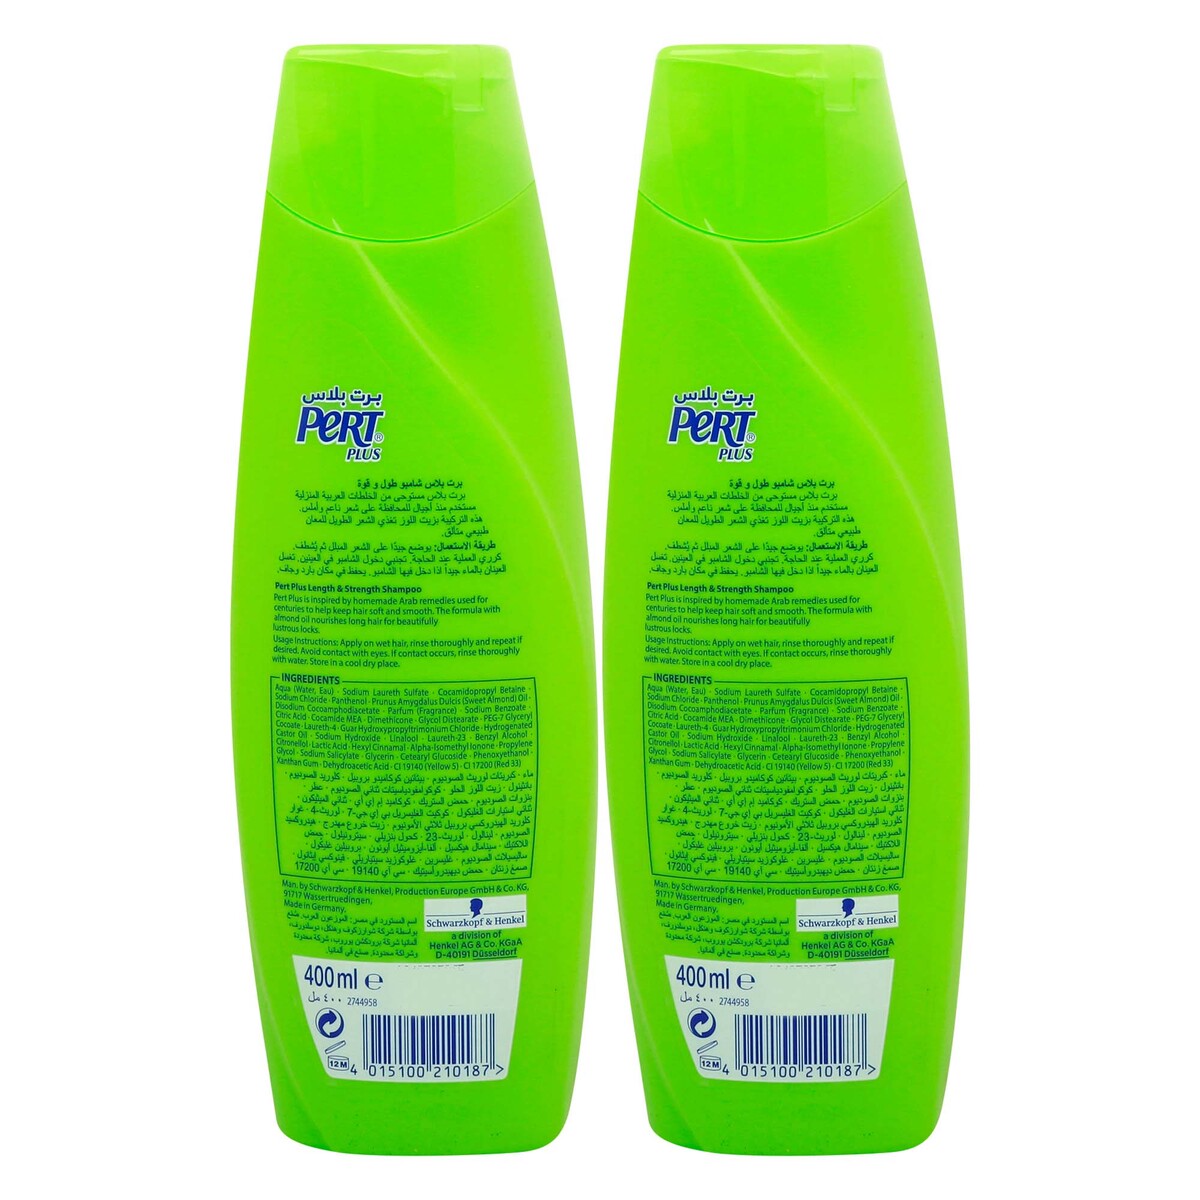 Pert Plus Length & Strength Shampoo with Almond Oil 2 x 400 ml